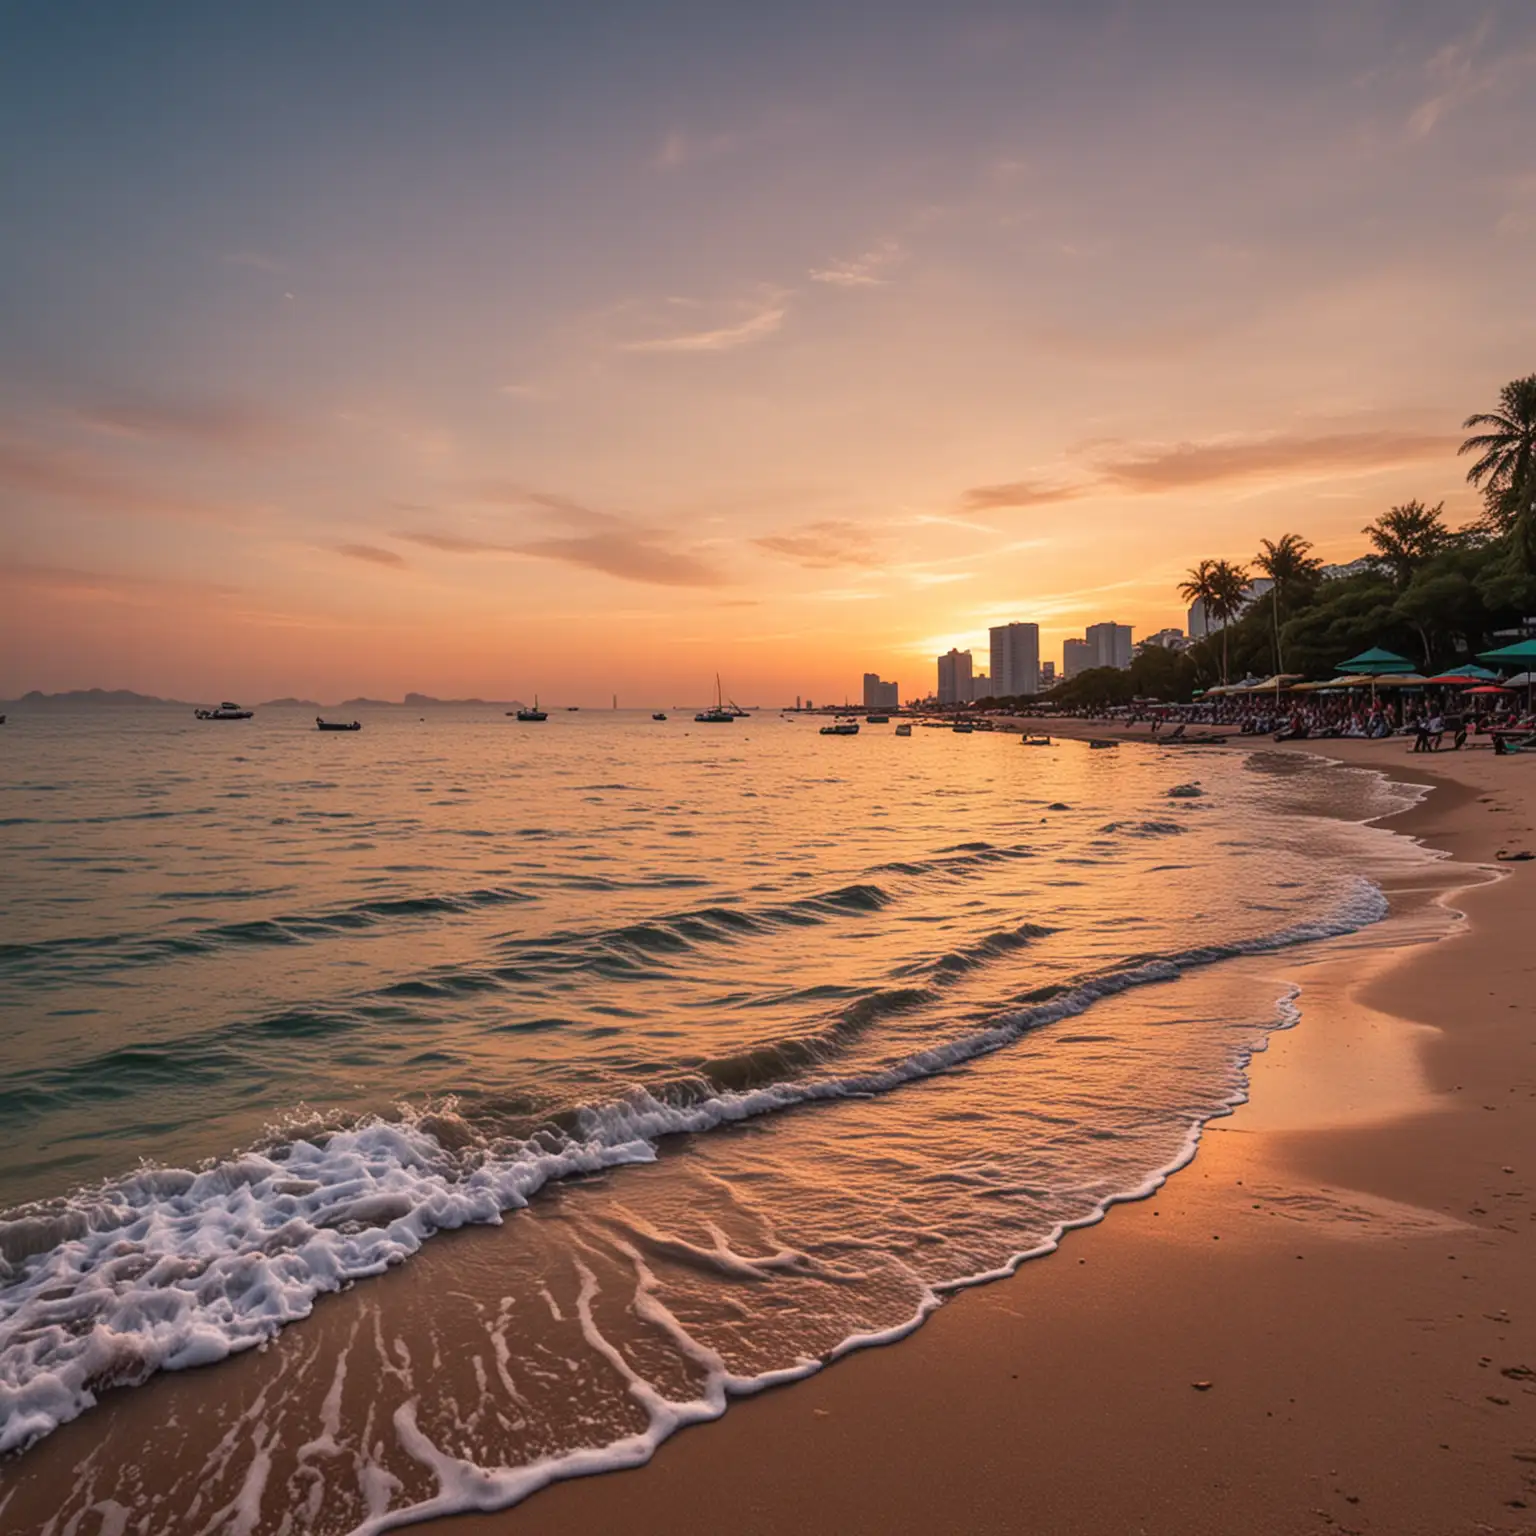 Spectacular Sunset Scenery at Pattaya Beach Thailand